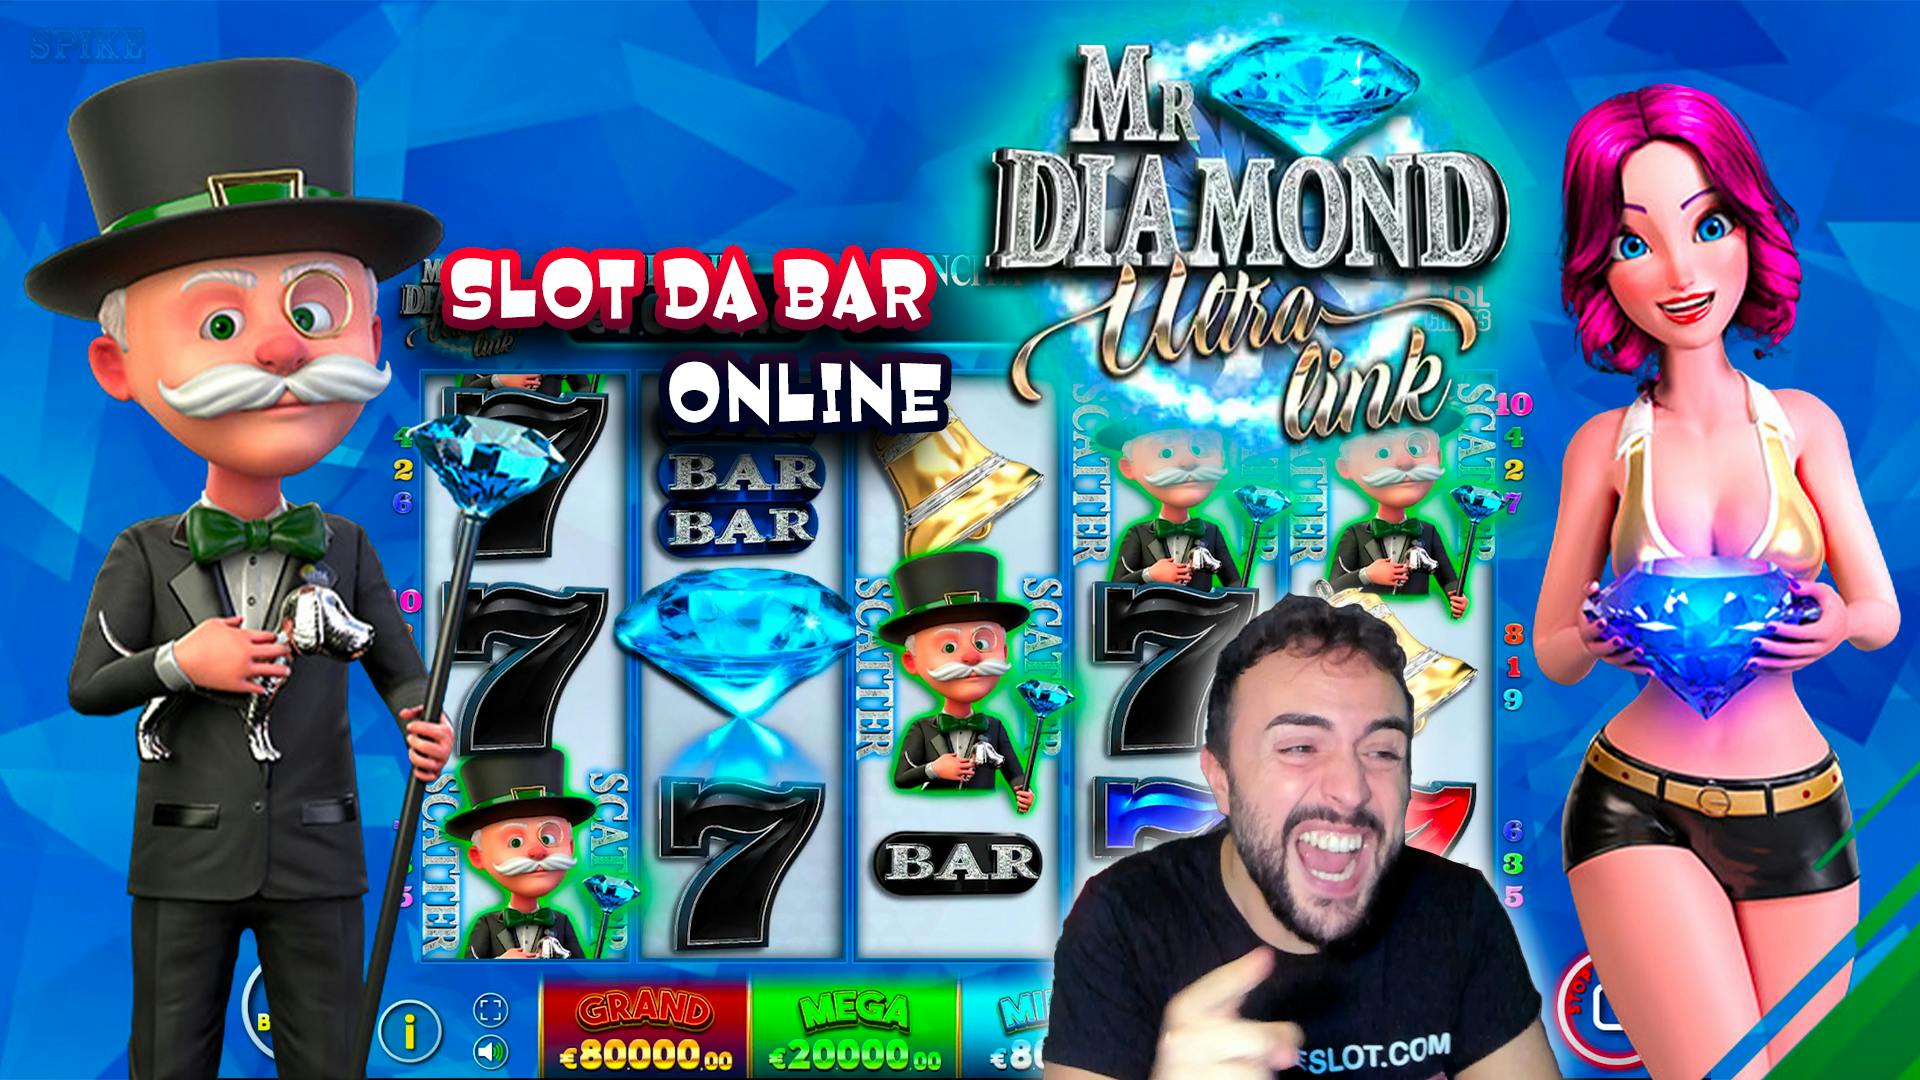 SLOT DA Bar ONLINE - Una partita alla MR. DIAMOND ULTRA LINK spike video